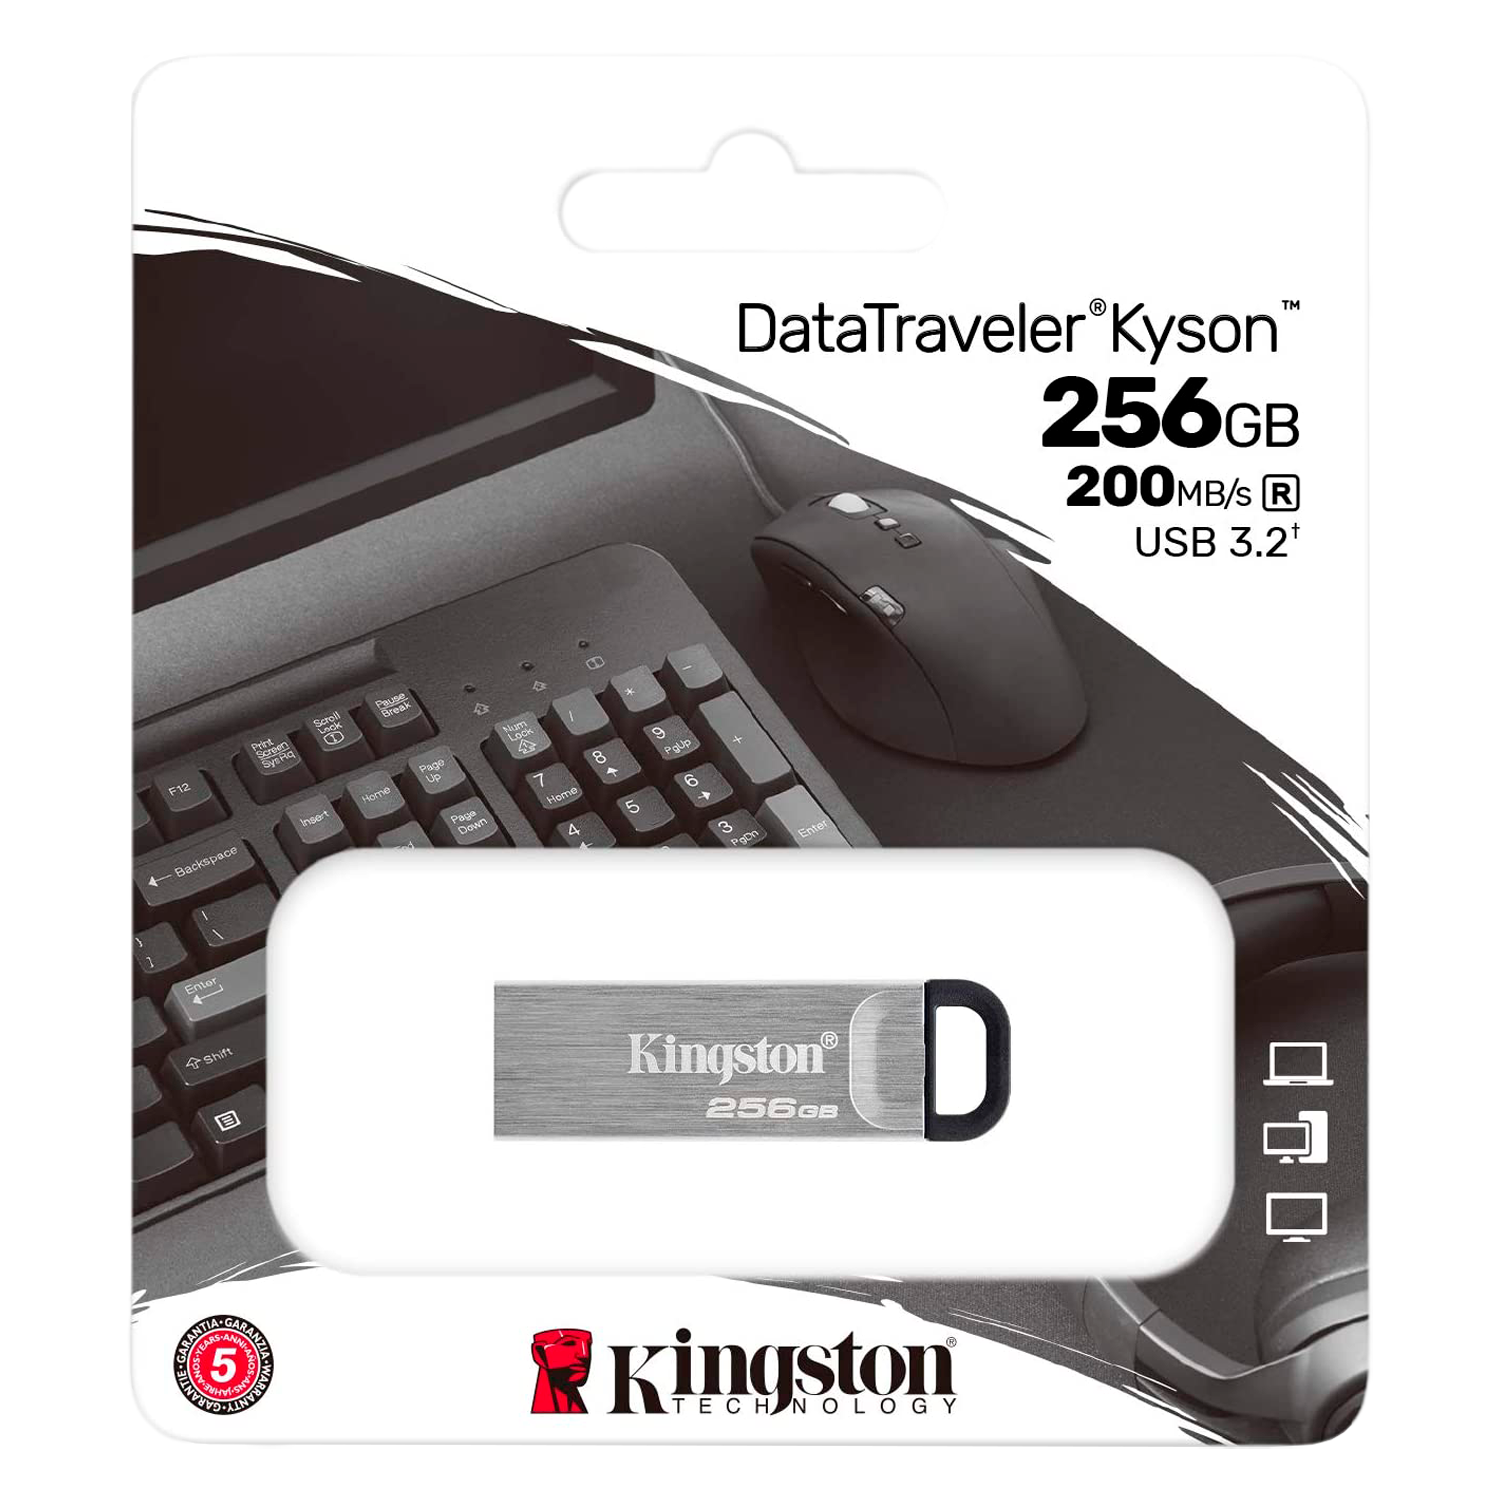 Pendrive Kingston DaTatraveler Kyson 256GB USB 3.2 - Prata (DTKN/256GB)